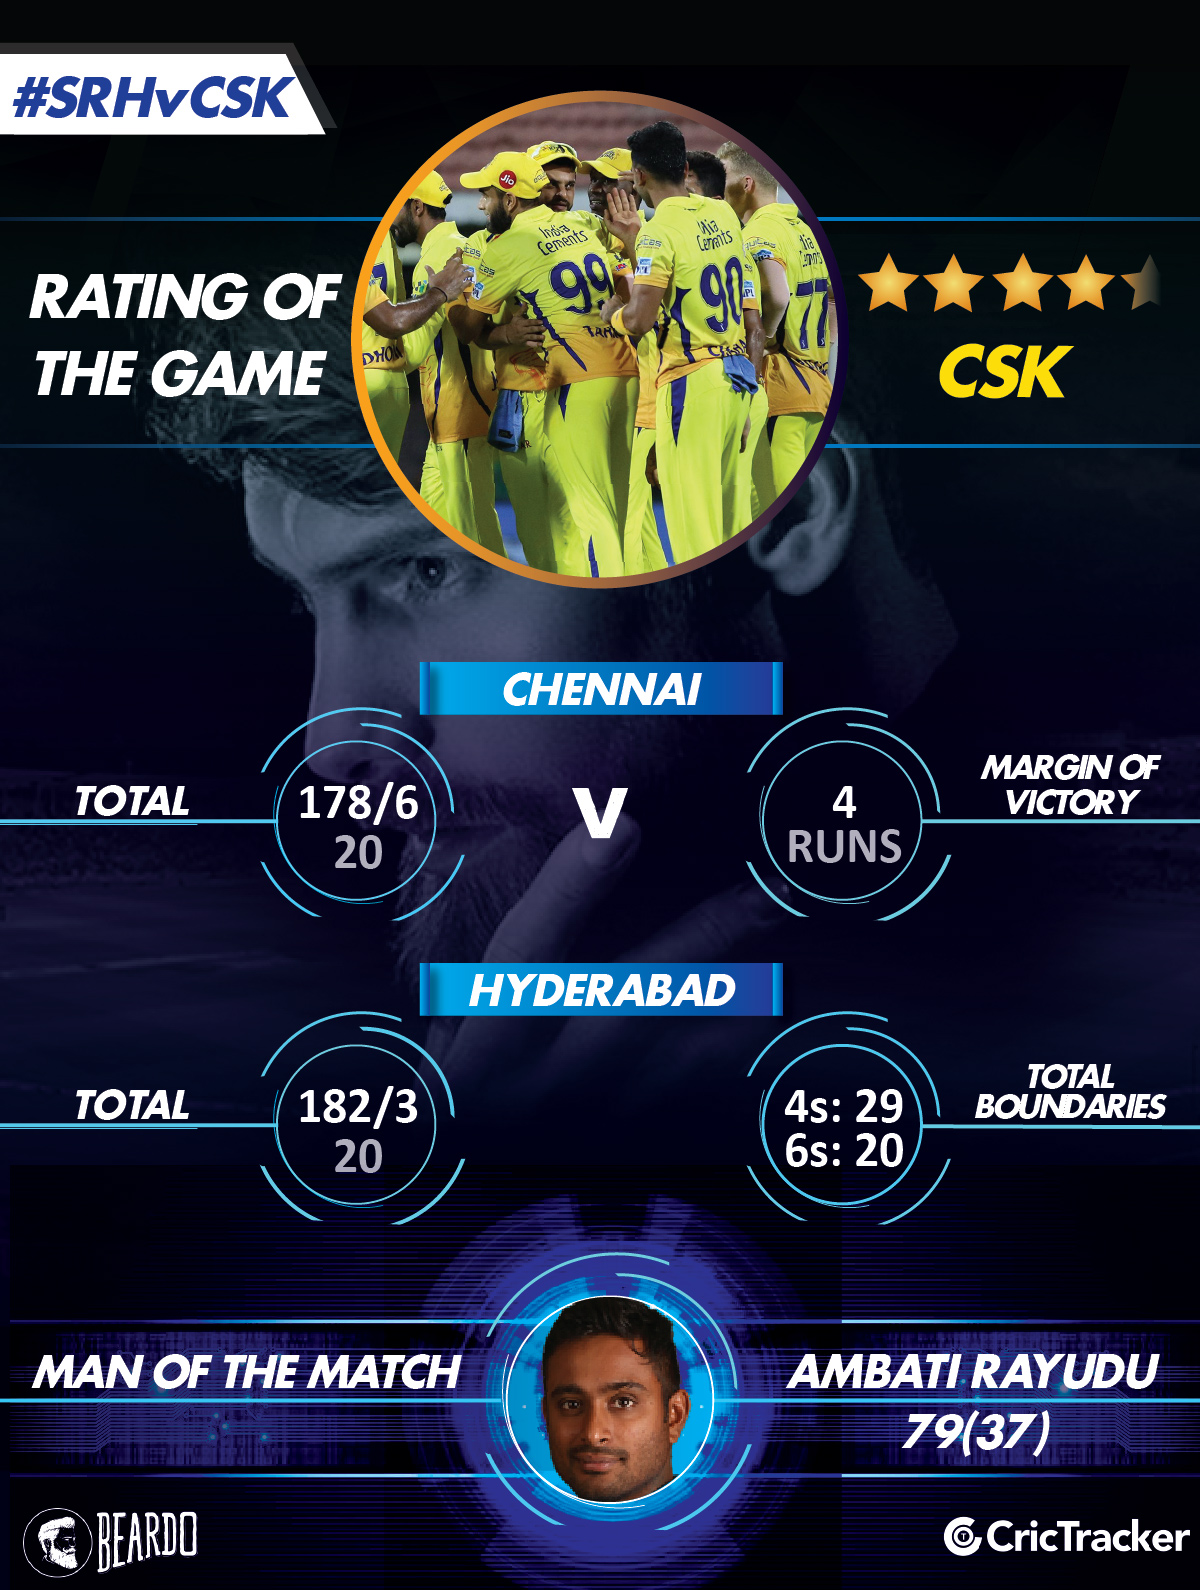 IPL2018-SRH-vs-CSK--RatinG-of-the-match-1